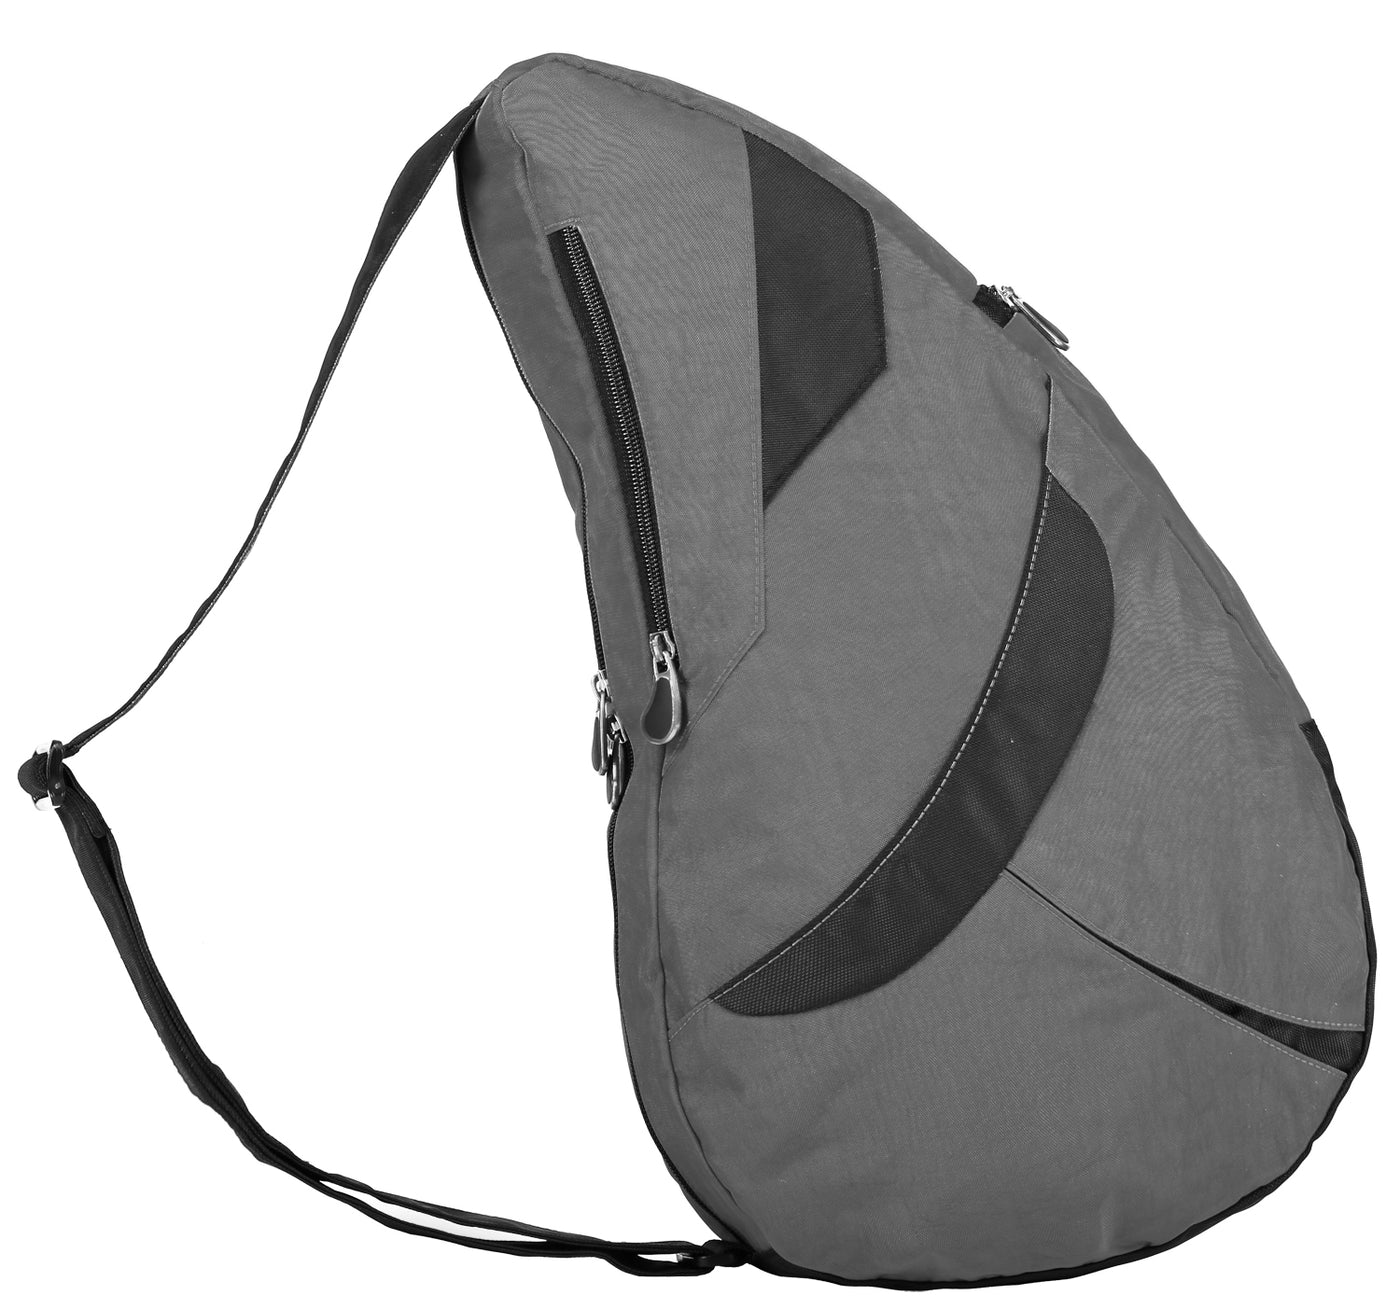 AmeriBag Small Healthy Back Bag tote Traveler (Stormy Grey)